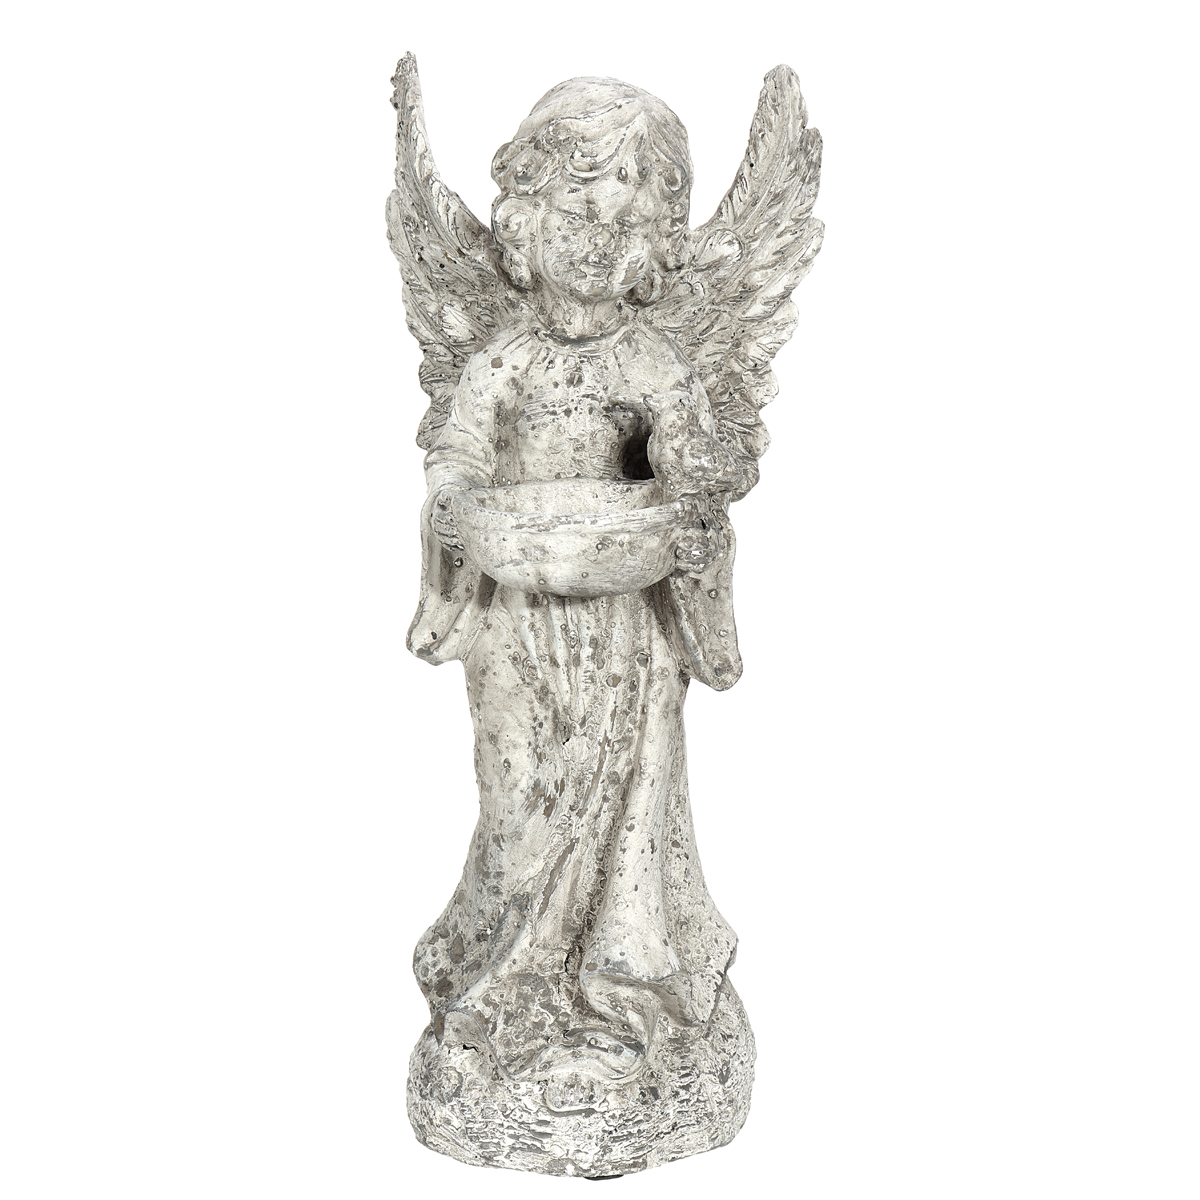 

Solar Fairy Angel /Cherub Garden Ornament Statue Figurine Art Sculpture Decorations